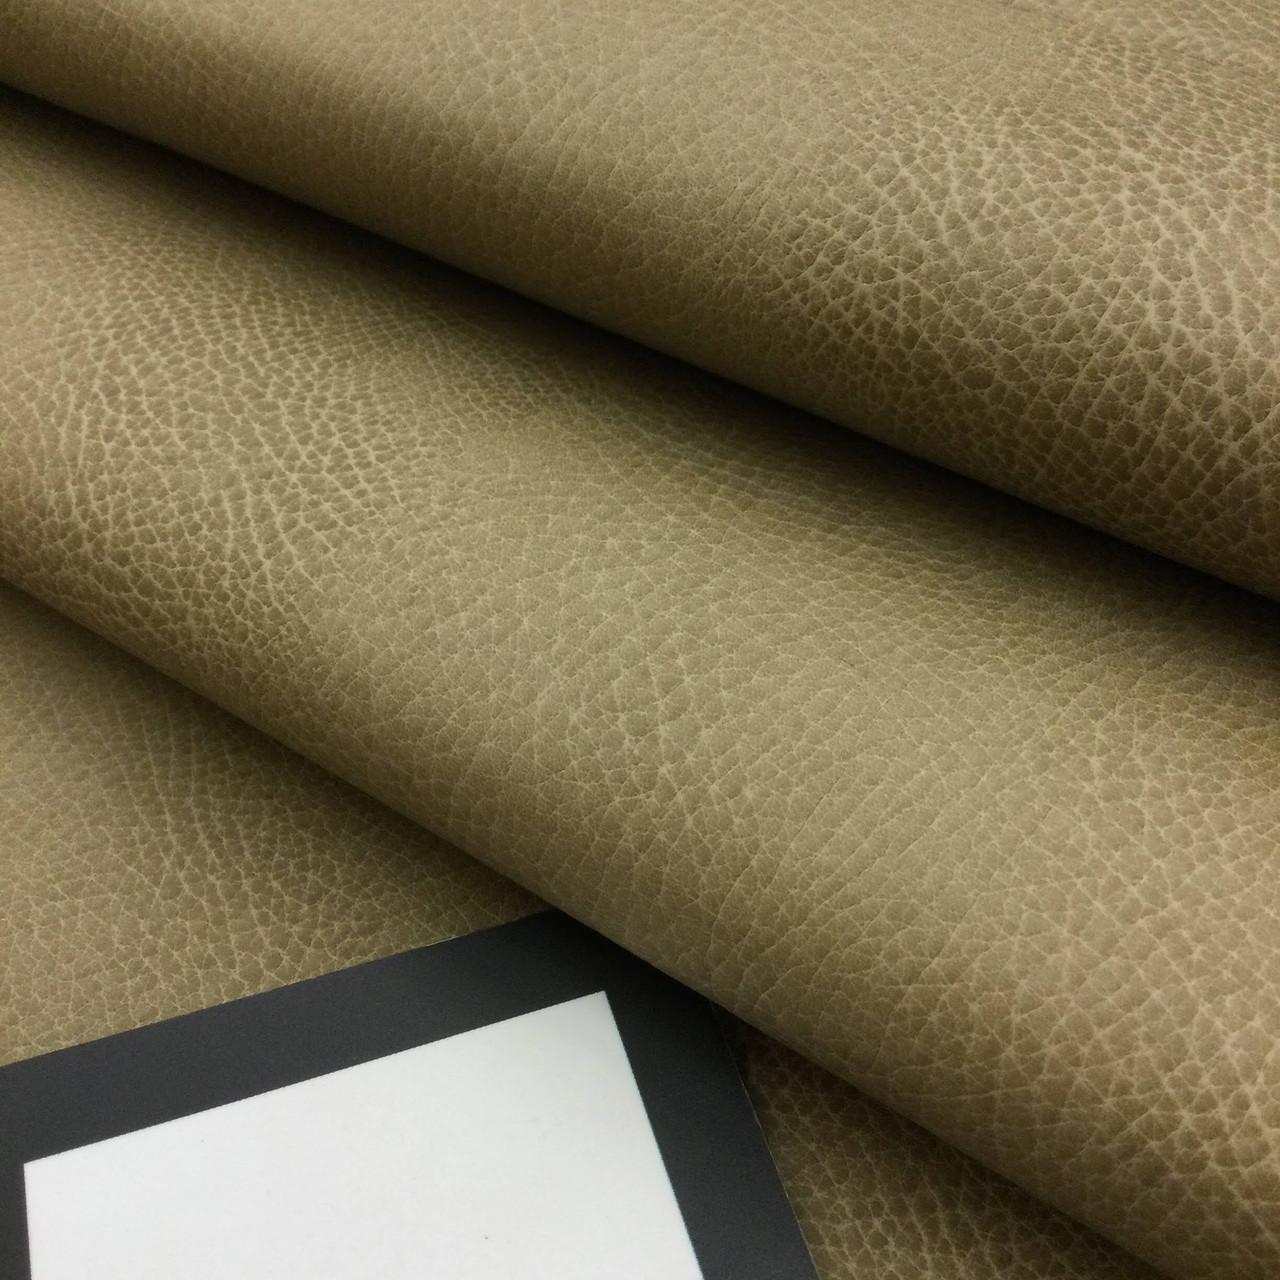 Alcantara Headliner Fabric Material for Automotive - WINIW Microfiber  Leather